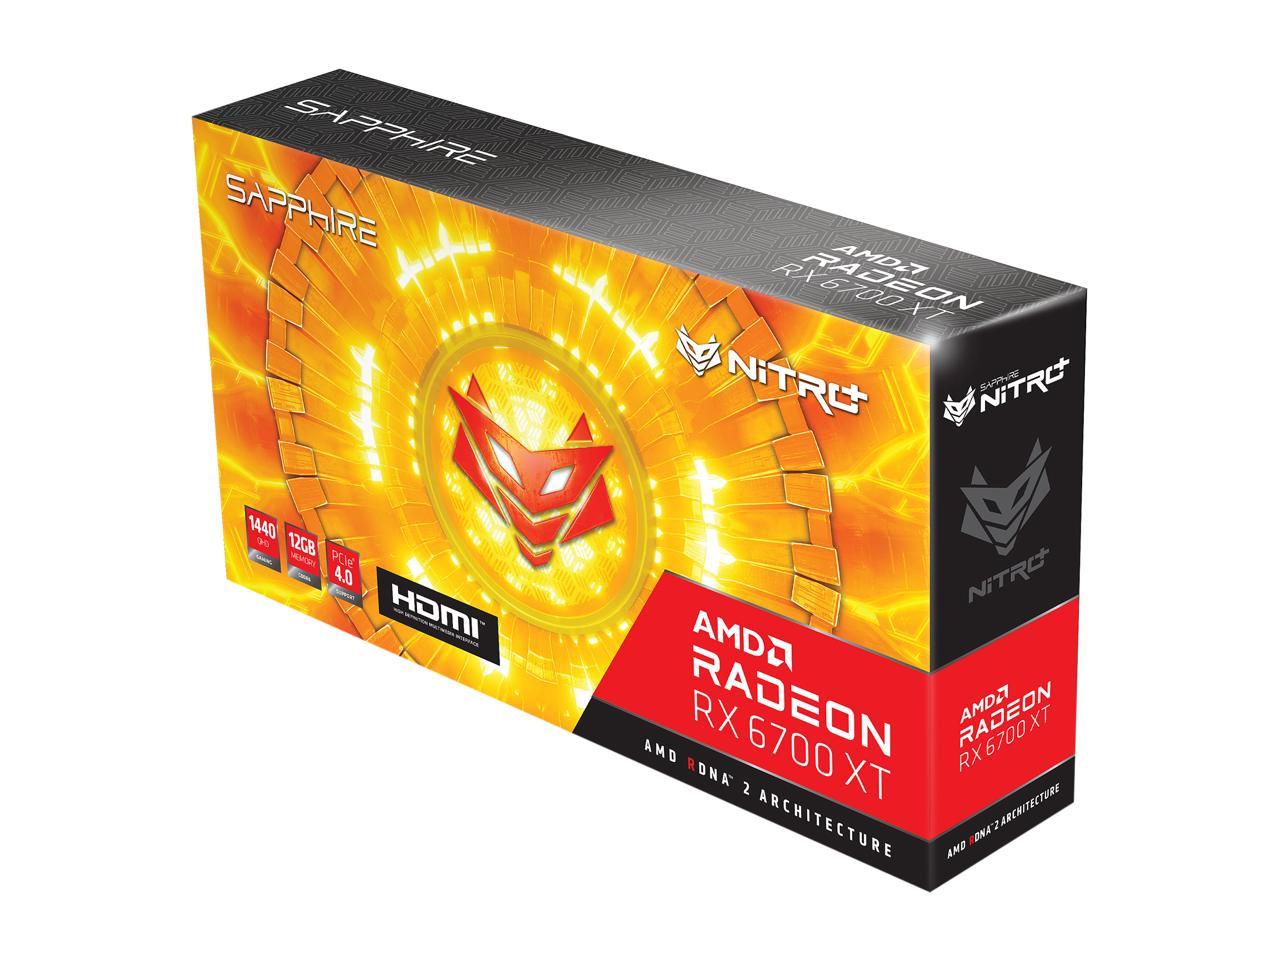 Sapphire Nitro+ Amd Radeon Rx 6700 Xt Gaming Oc Video Card, 11306